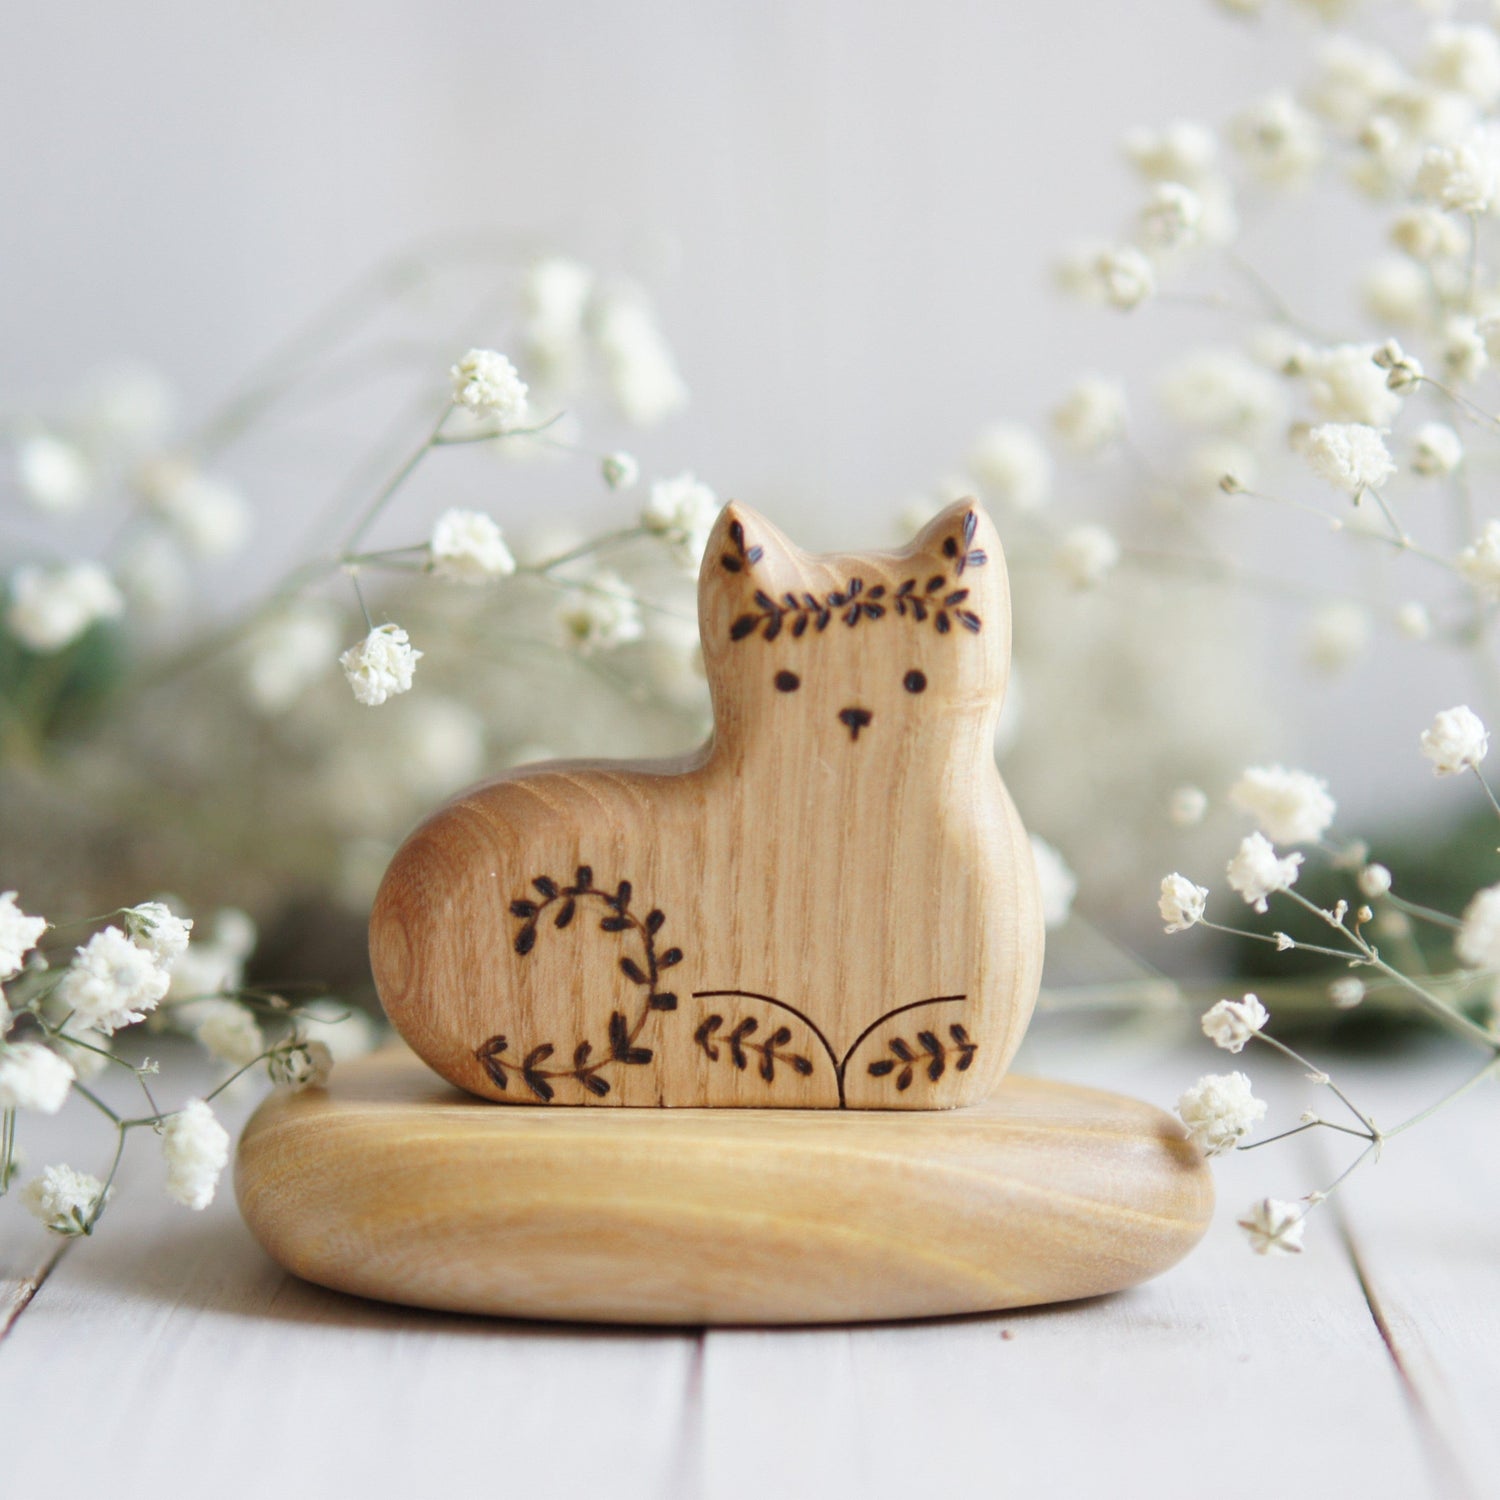 Tiny Fox Hole Wooden Animals Handmade Wooden Cat Toy